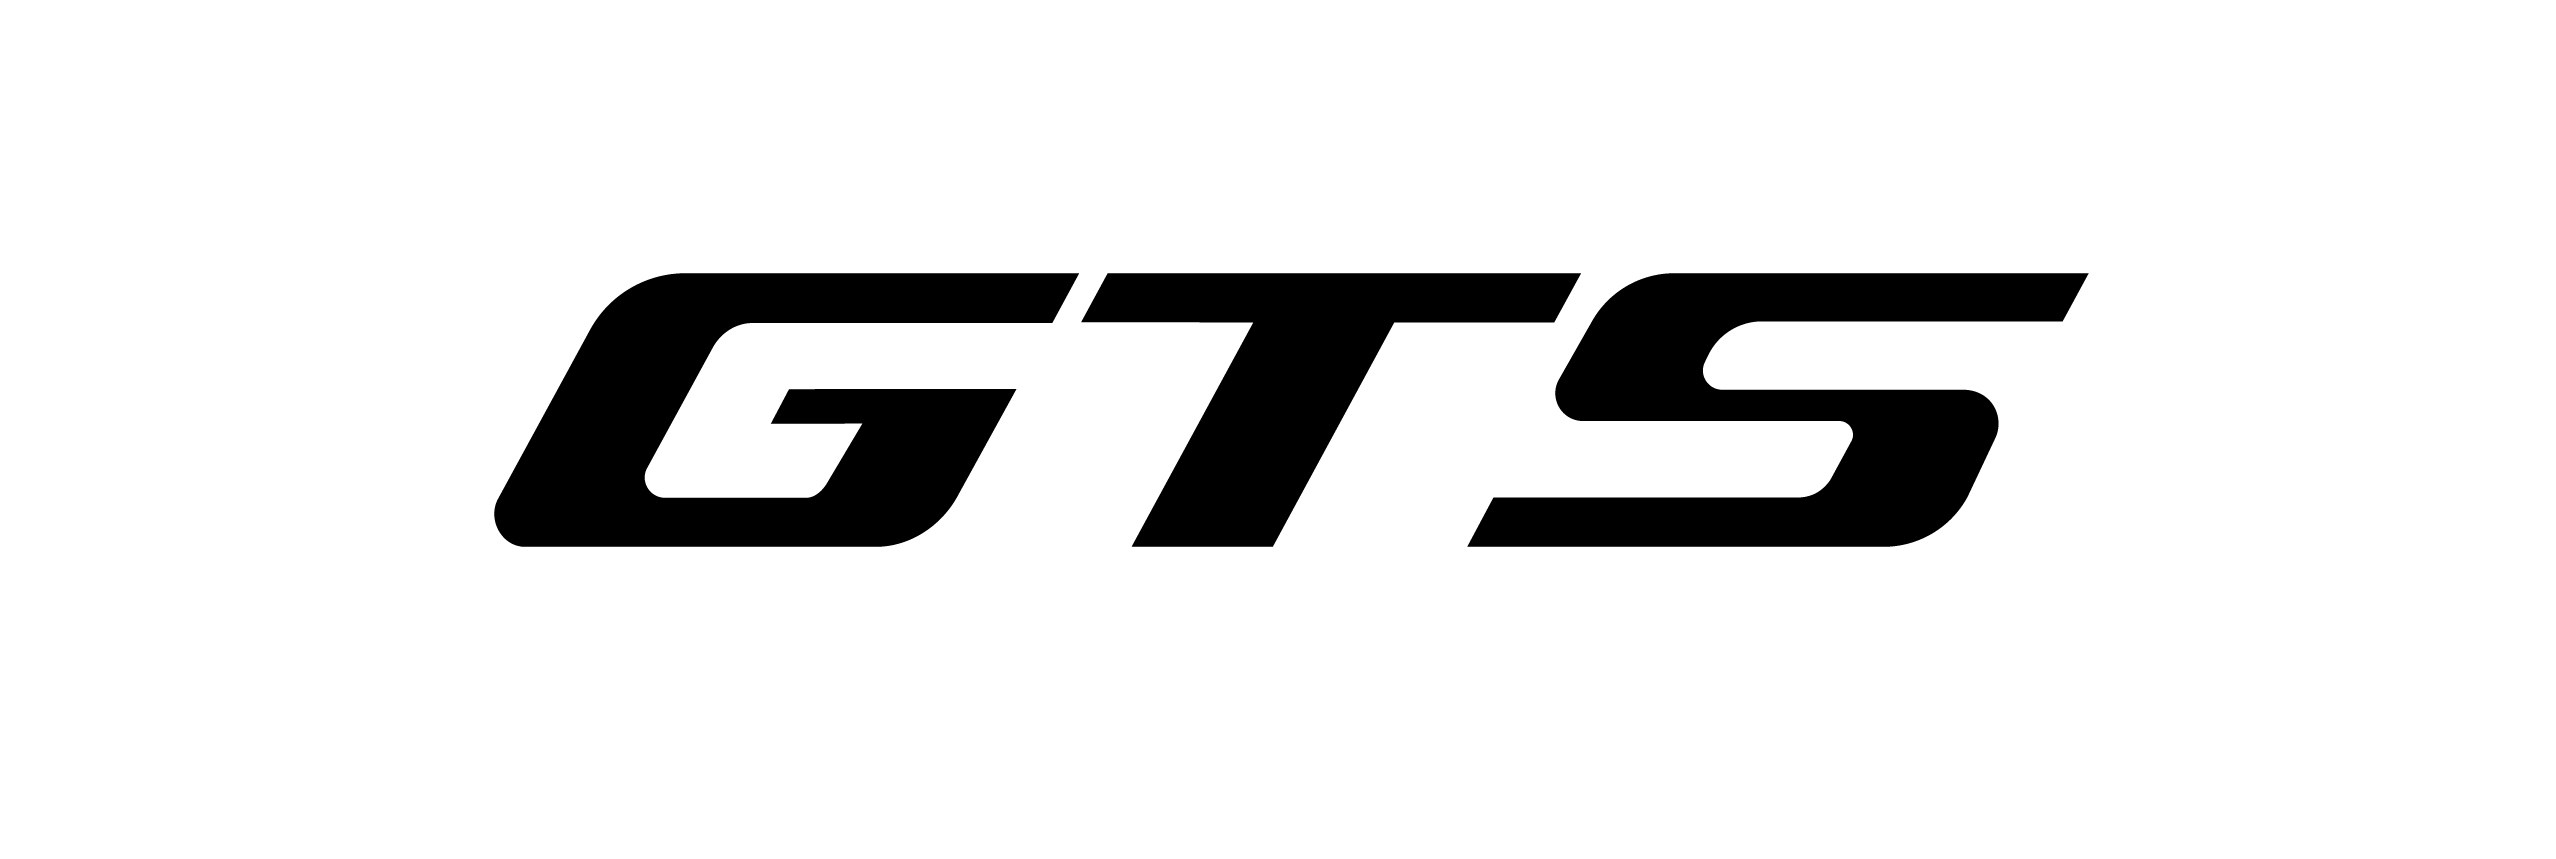 GTS Logo